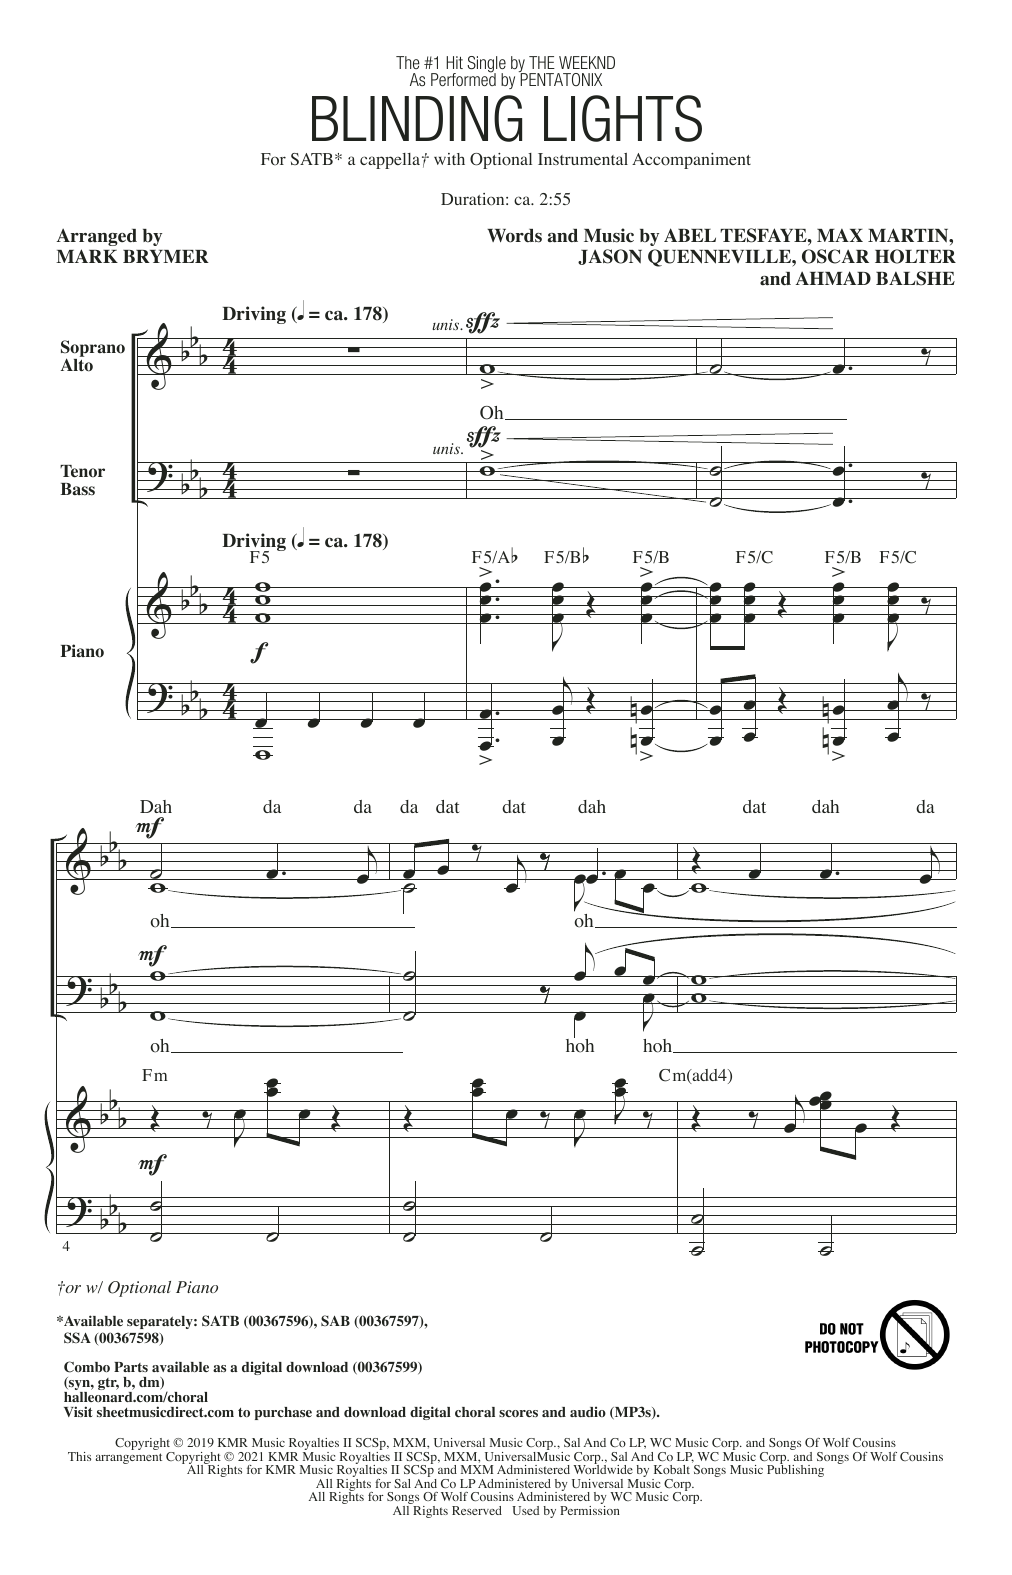 Pentatonix Blinding Lights (arr. Mark Brymer) Sheet Music Notes & Chords for SSA Choir - Download or Print PDF